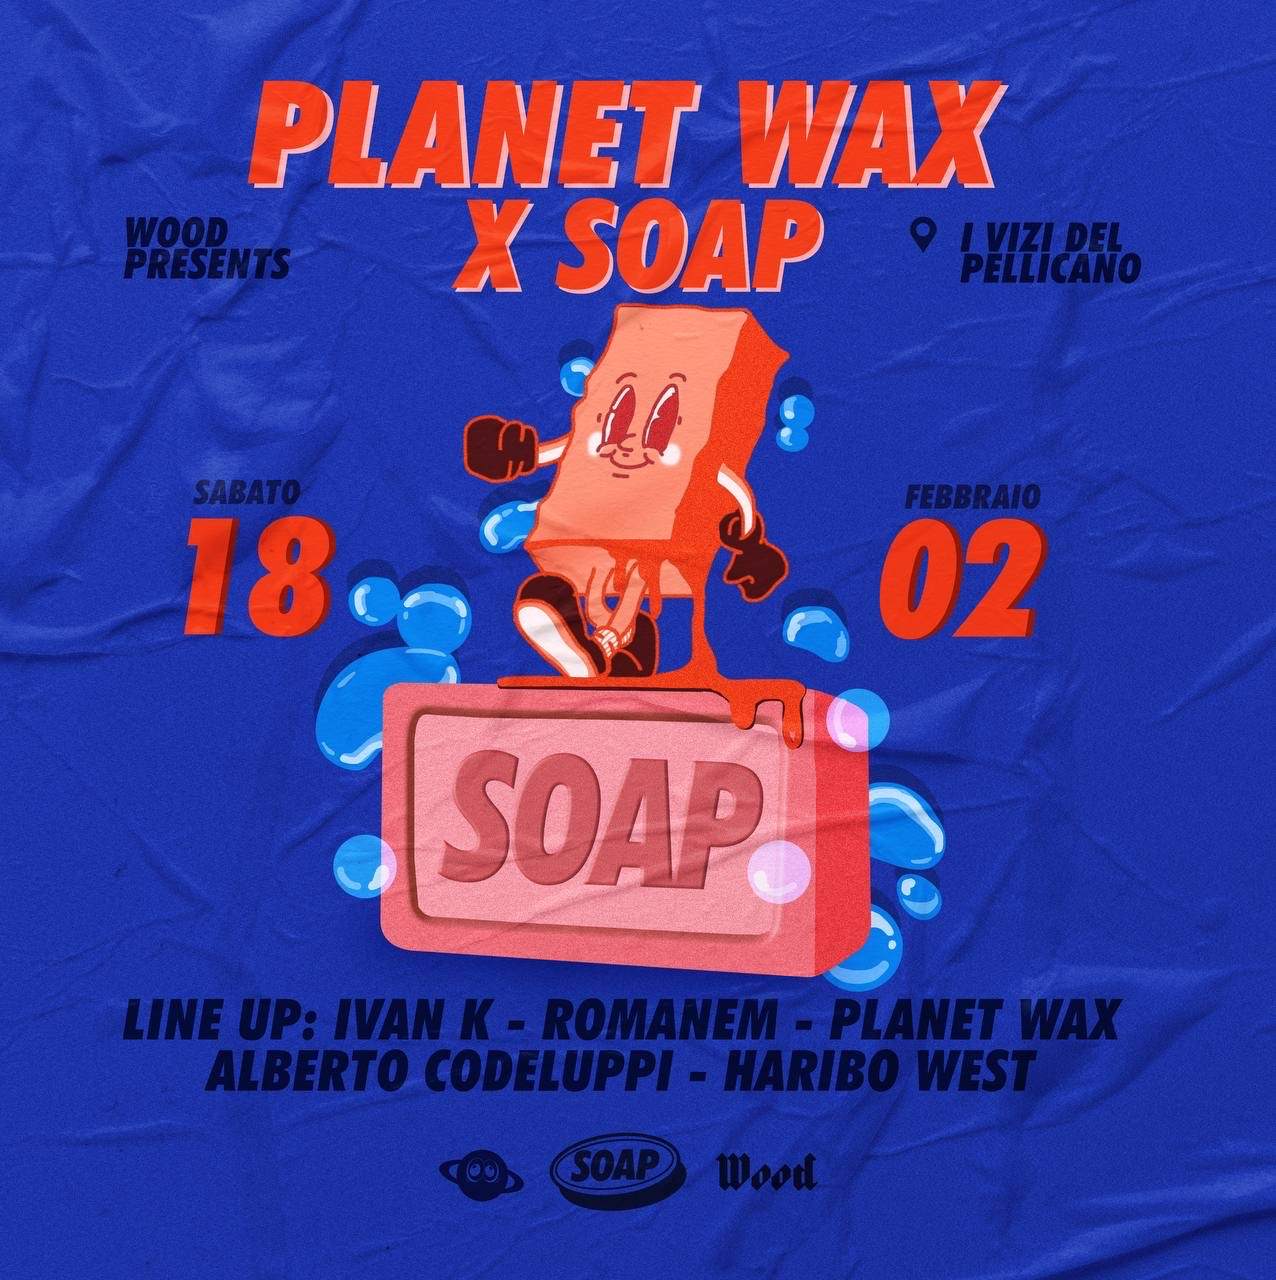 Wood presents: PLANET WAX X SOAP - フライヤー表